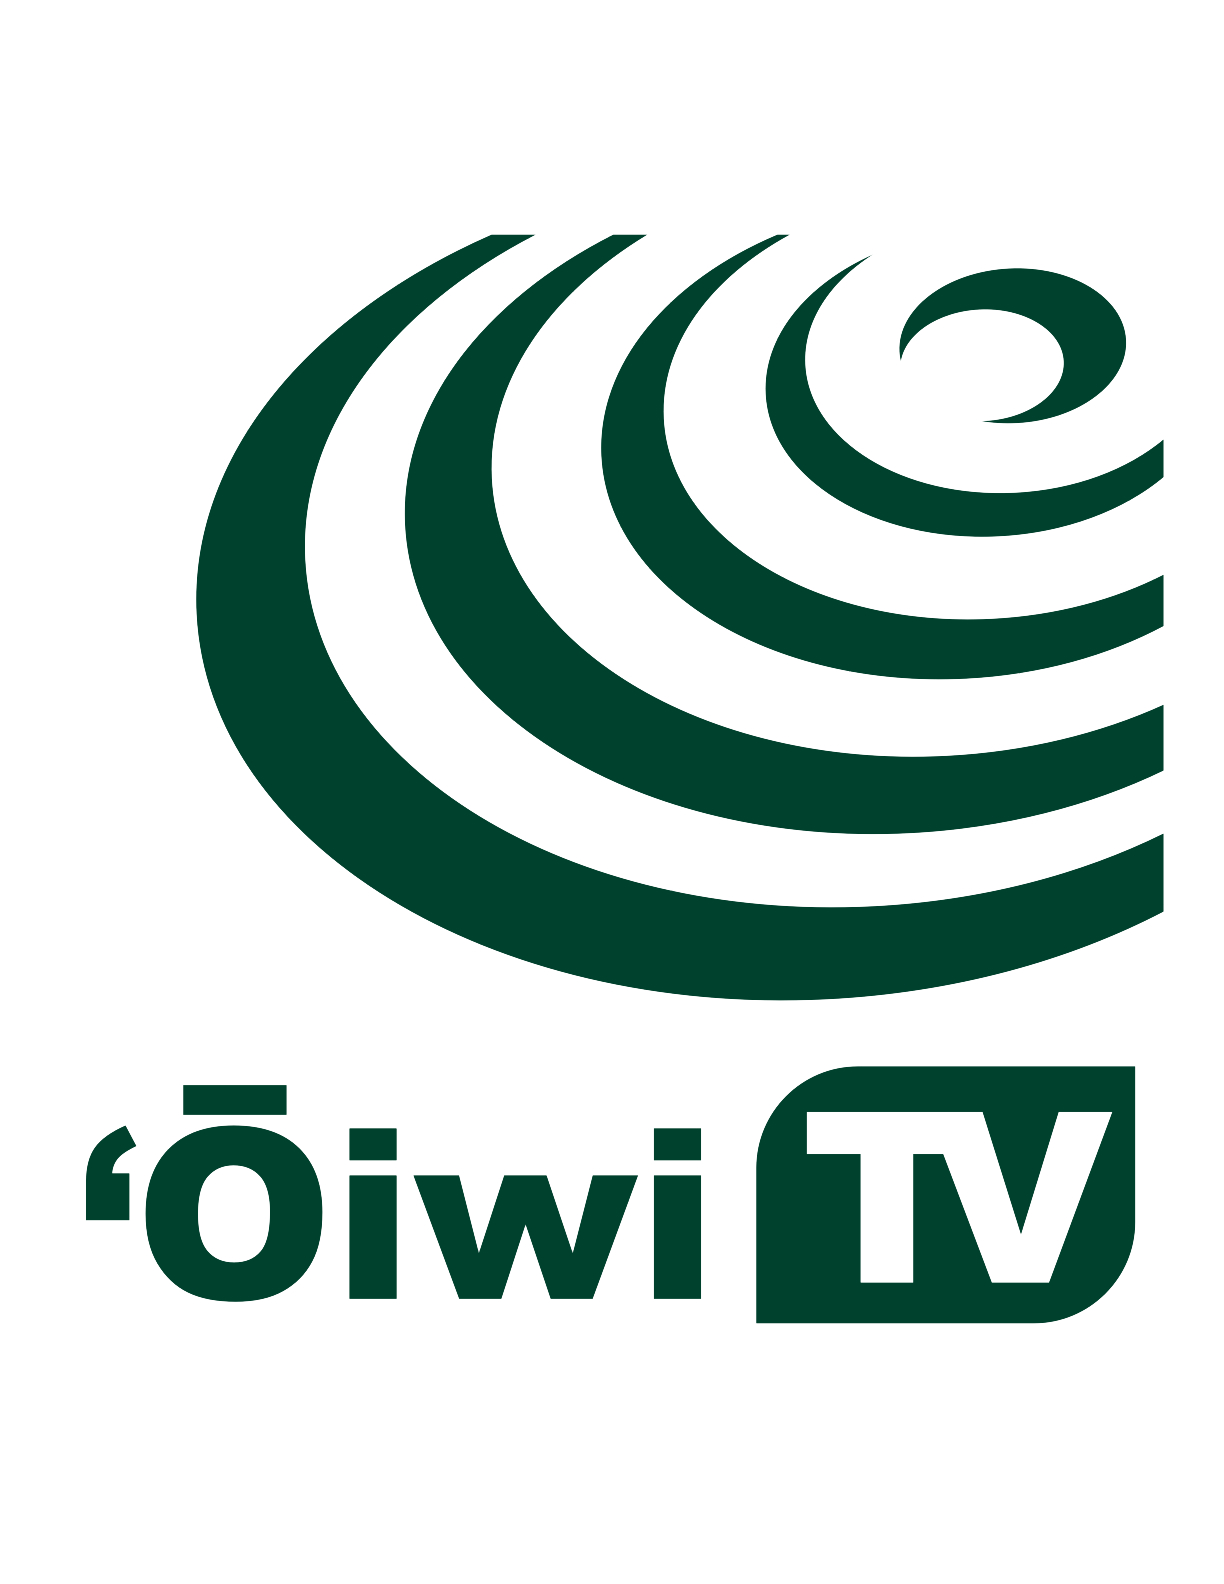 OiwiTV_Logo_Green (1).png